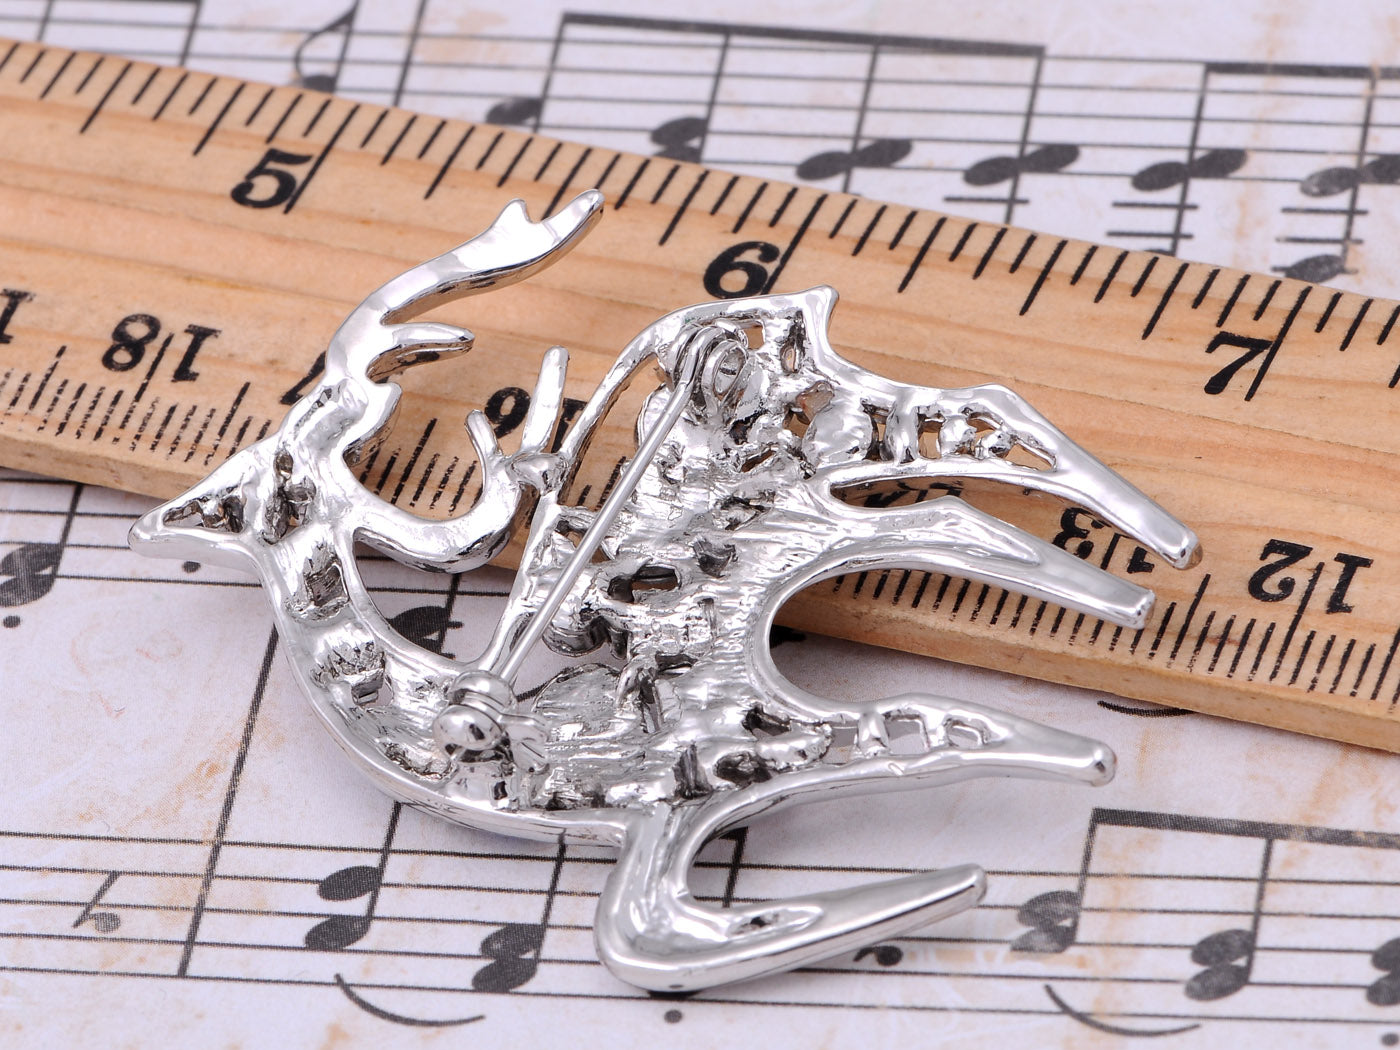 Studded Cat Eye Deer Animal Jewelry Pin Brooch